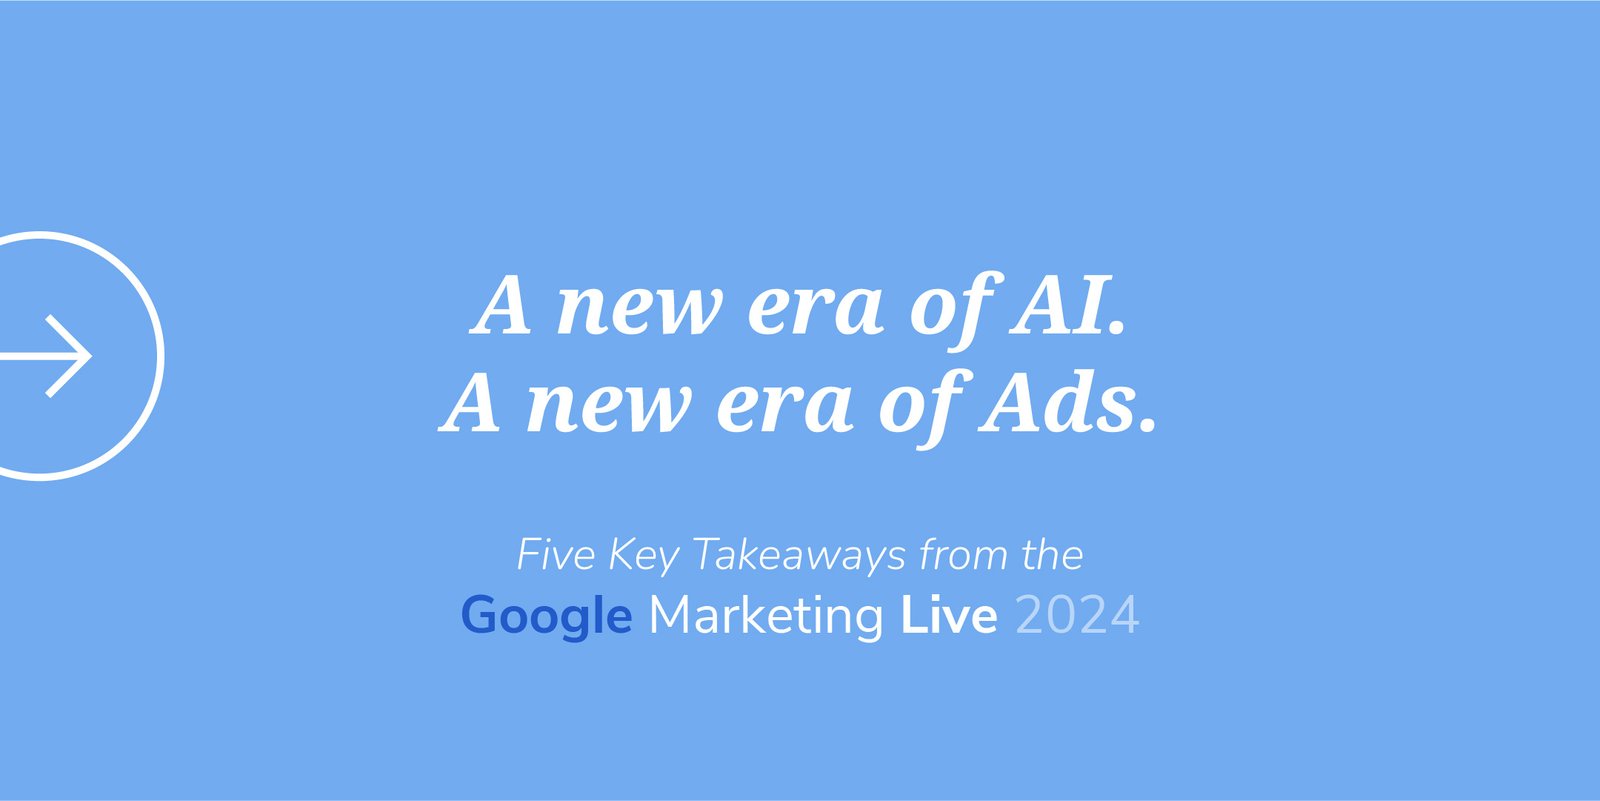 Five Key Takeaways from Google's Marketing Live